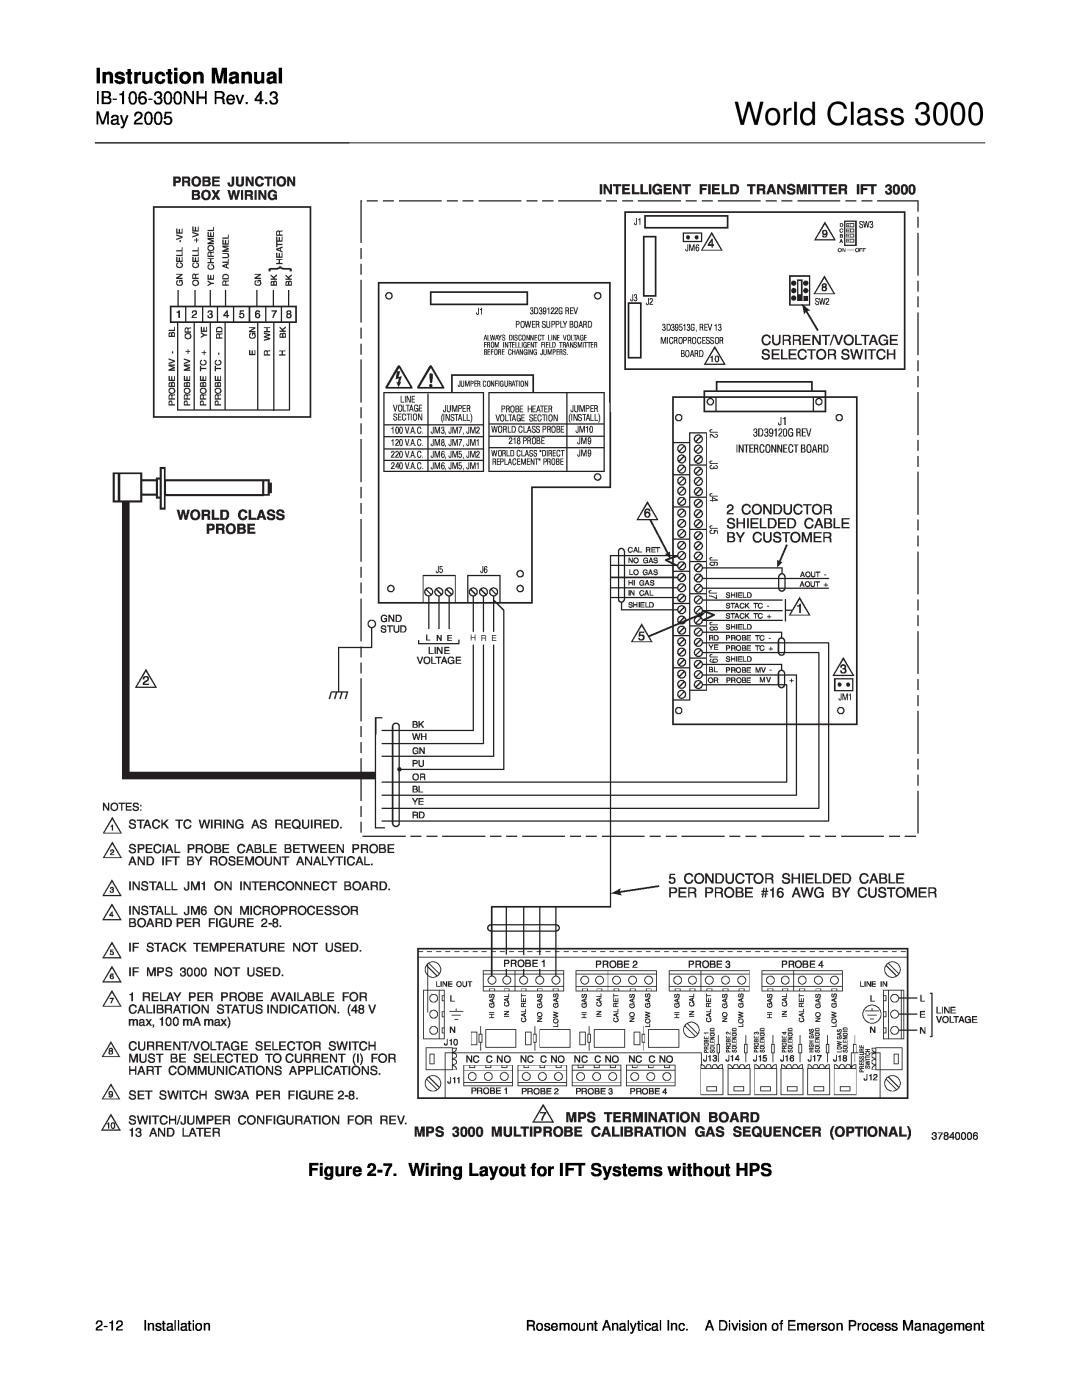 Emerson 3000 World Class, Instruction Manual, Intelligent Field Transmitter Ift, Probe, Mps Termination Board, Box Wiring 